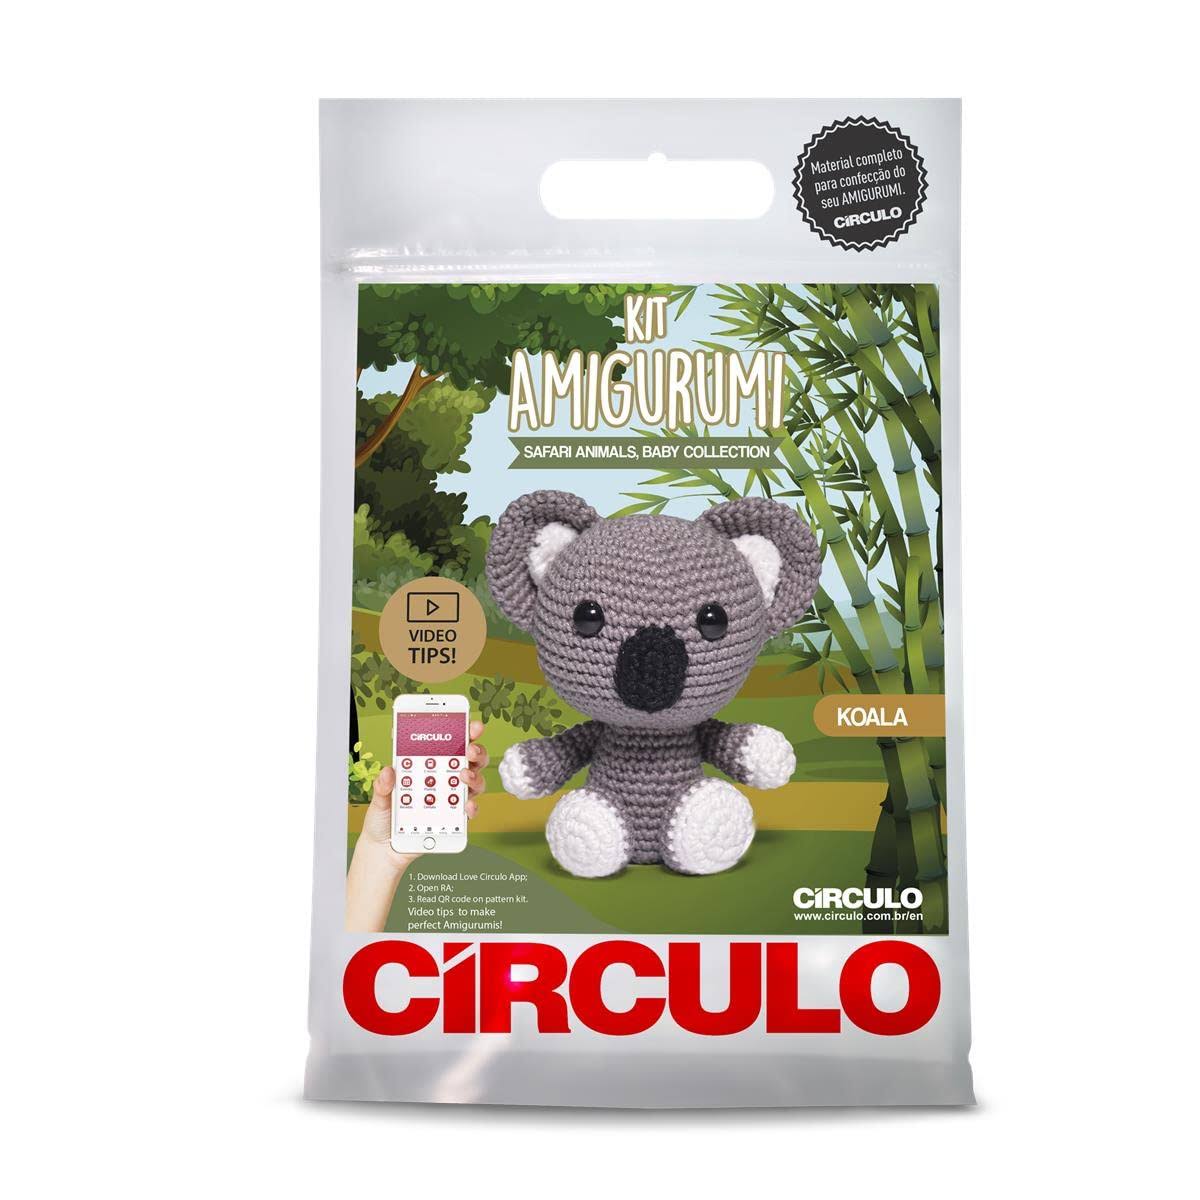 Circulo Amigurumi Kit Safari Animals Baby Collection - Yarn.com